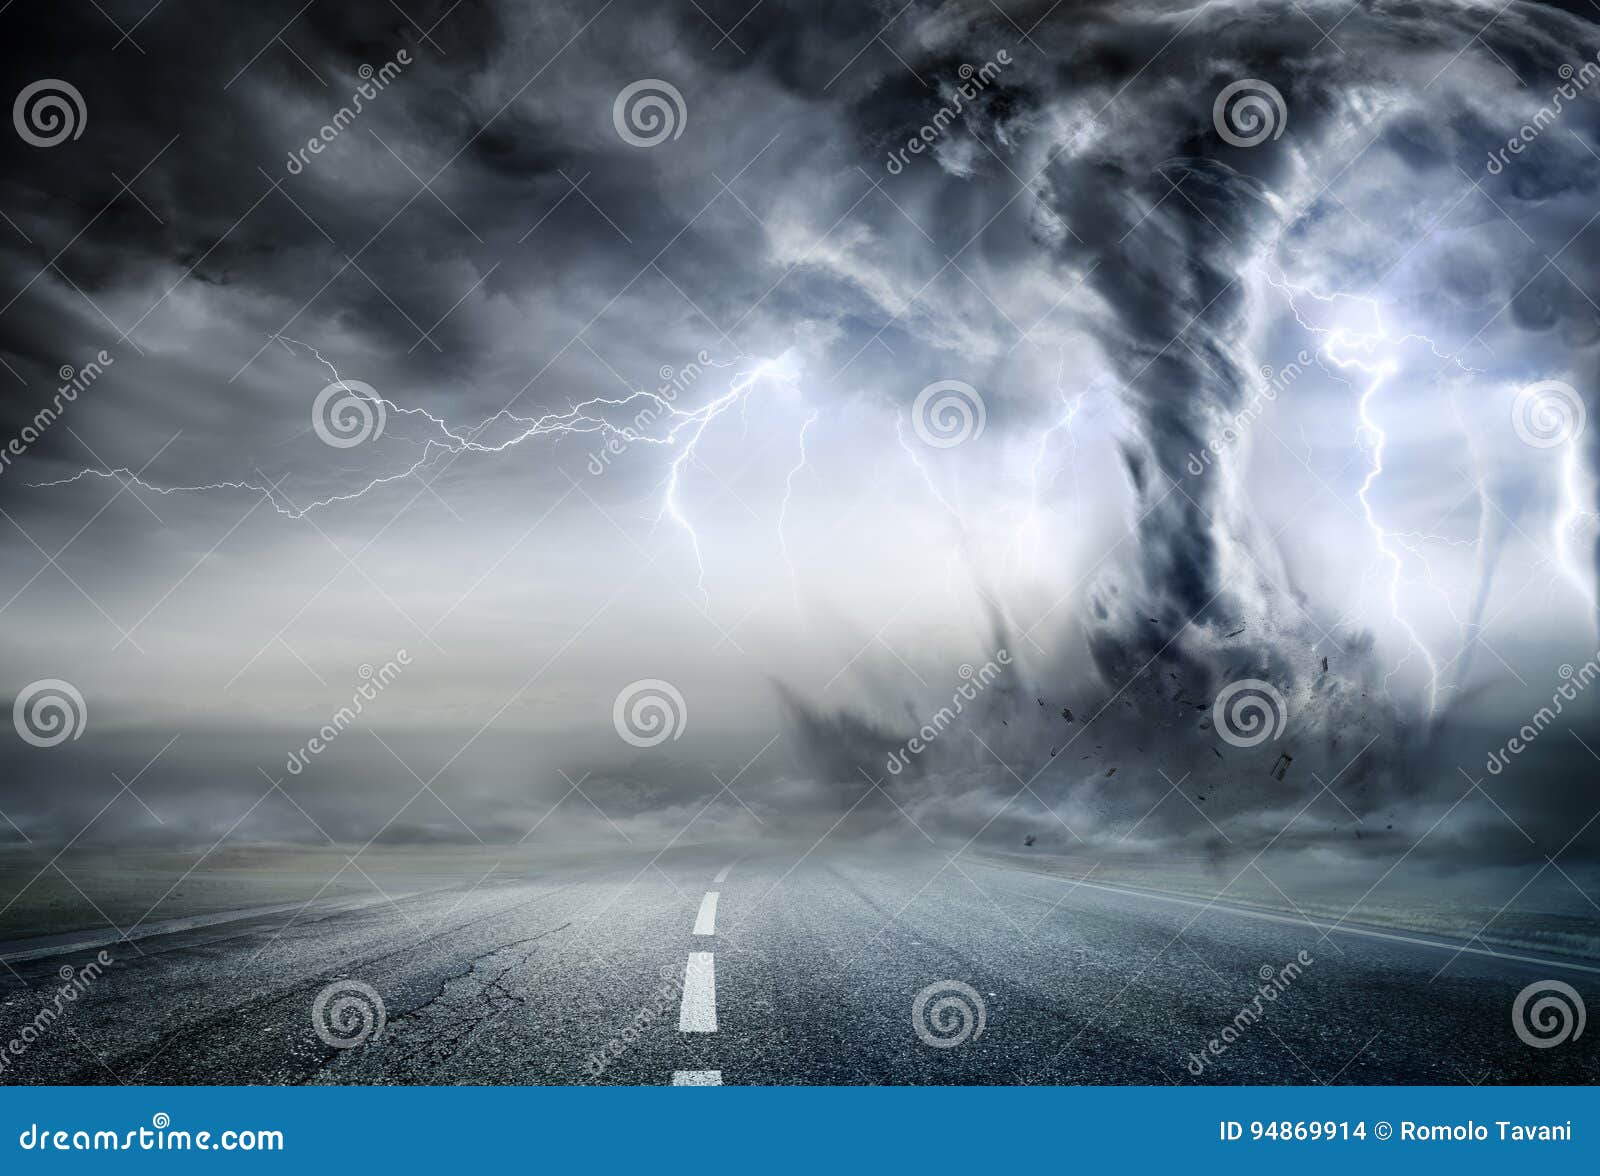 powerful tornado on road